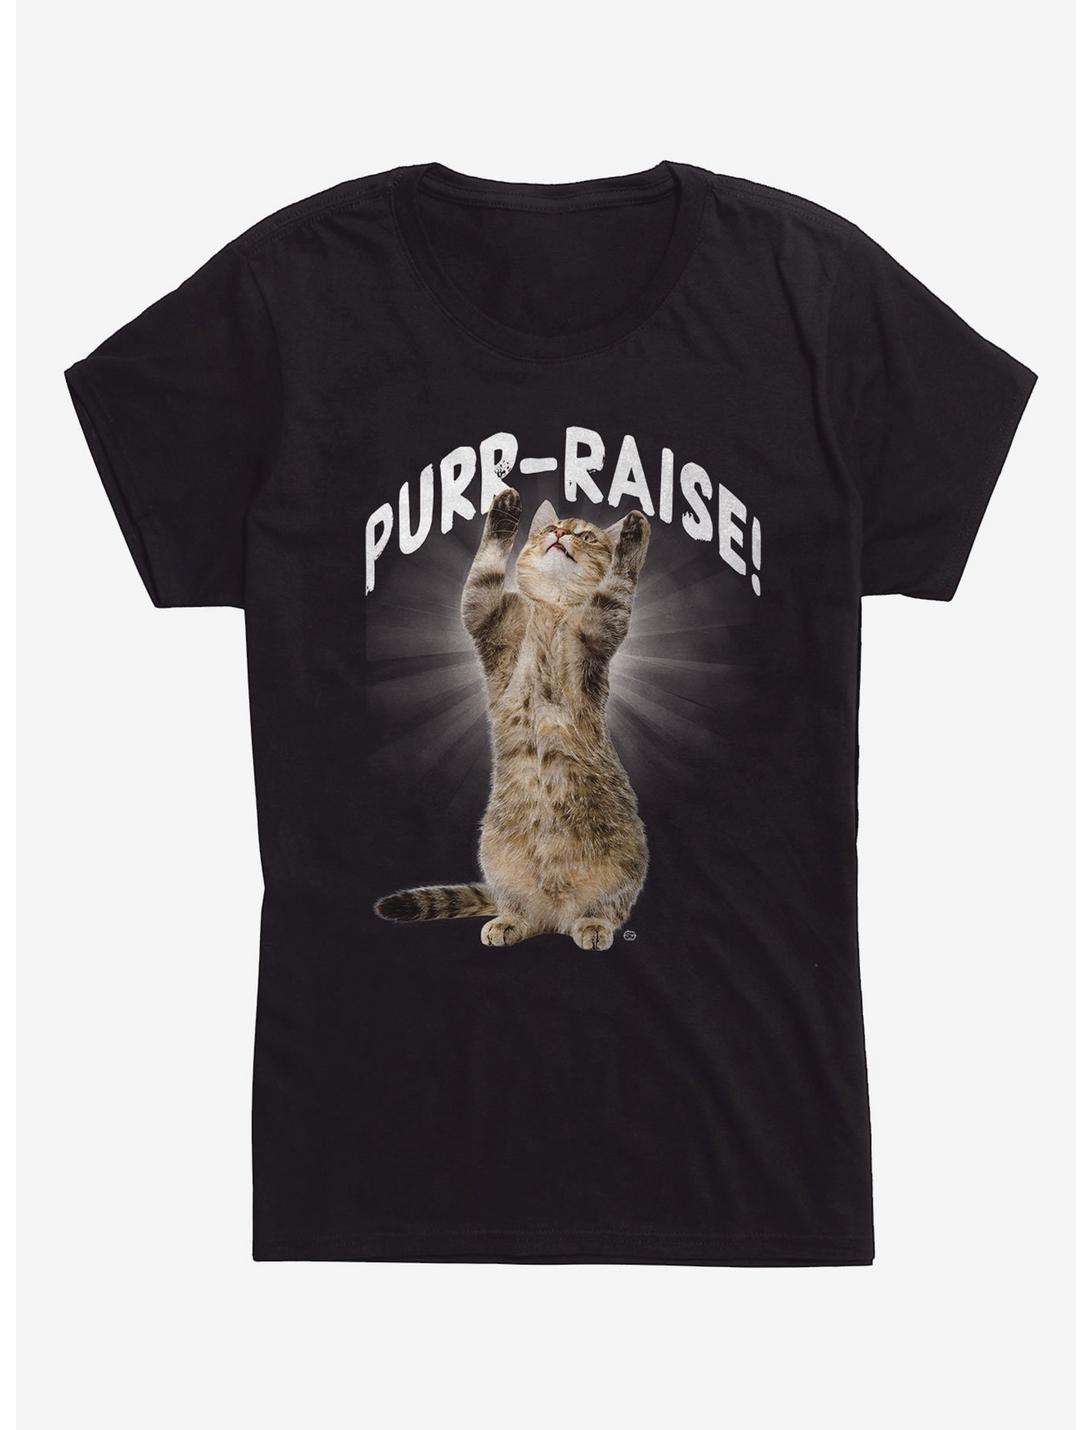 Purraise Cat Girls T-Shirt, BLACK, hi-res